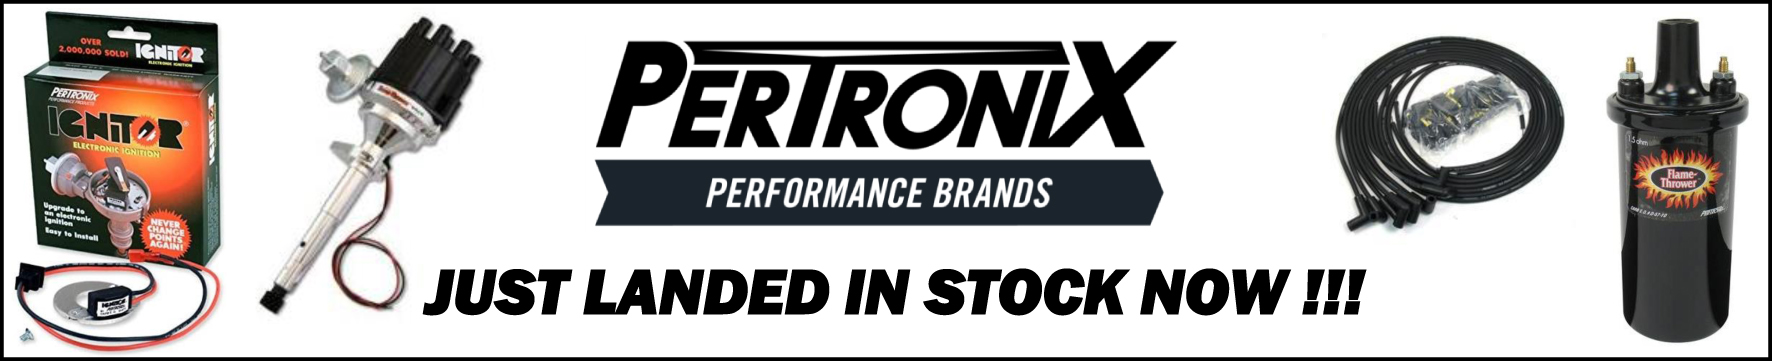 Pertronix - Performance brands